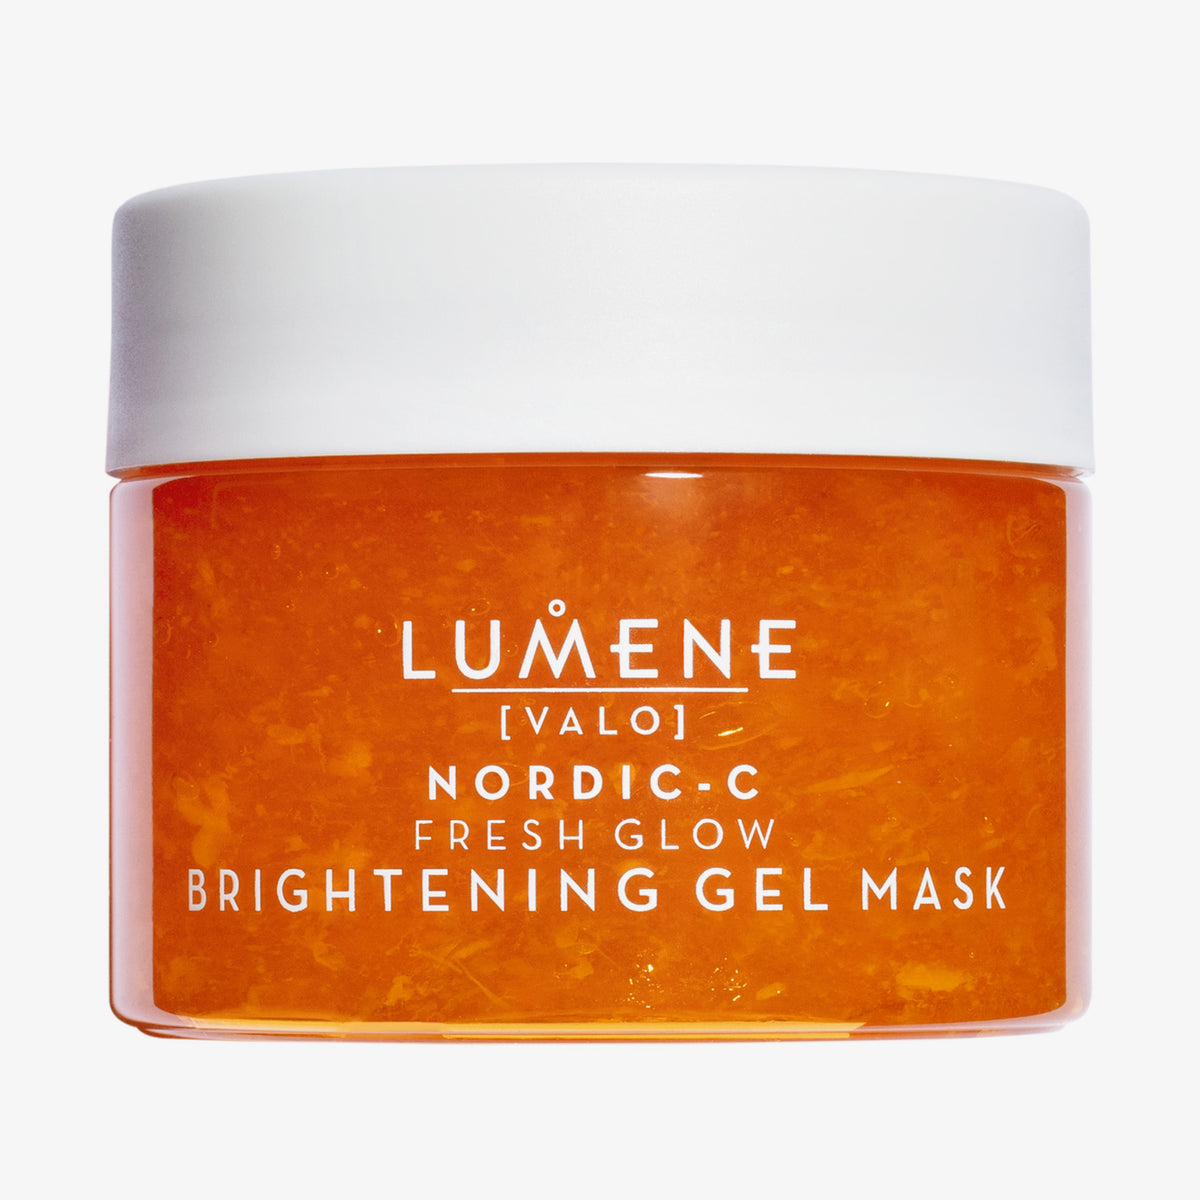 Lumene | NORDIC-C [VALO] Fresh Glow Brightening Gel Mask